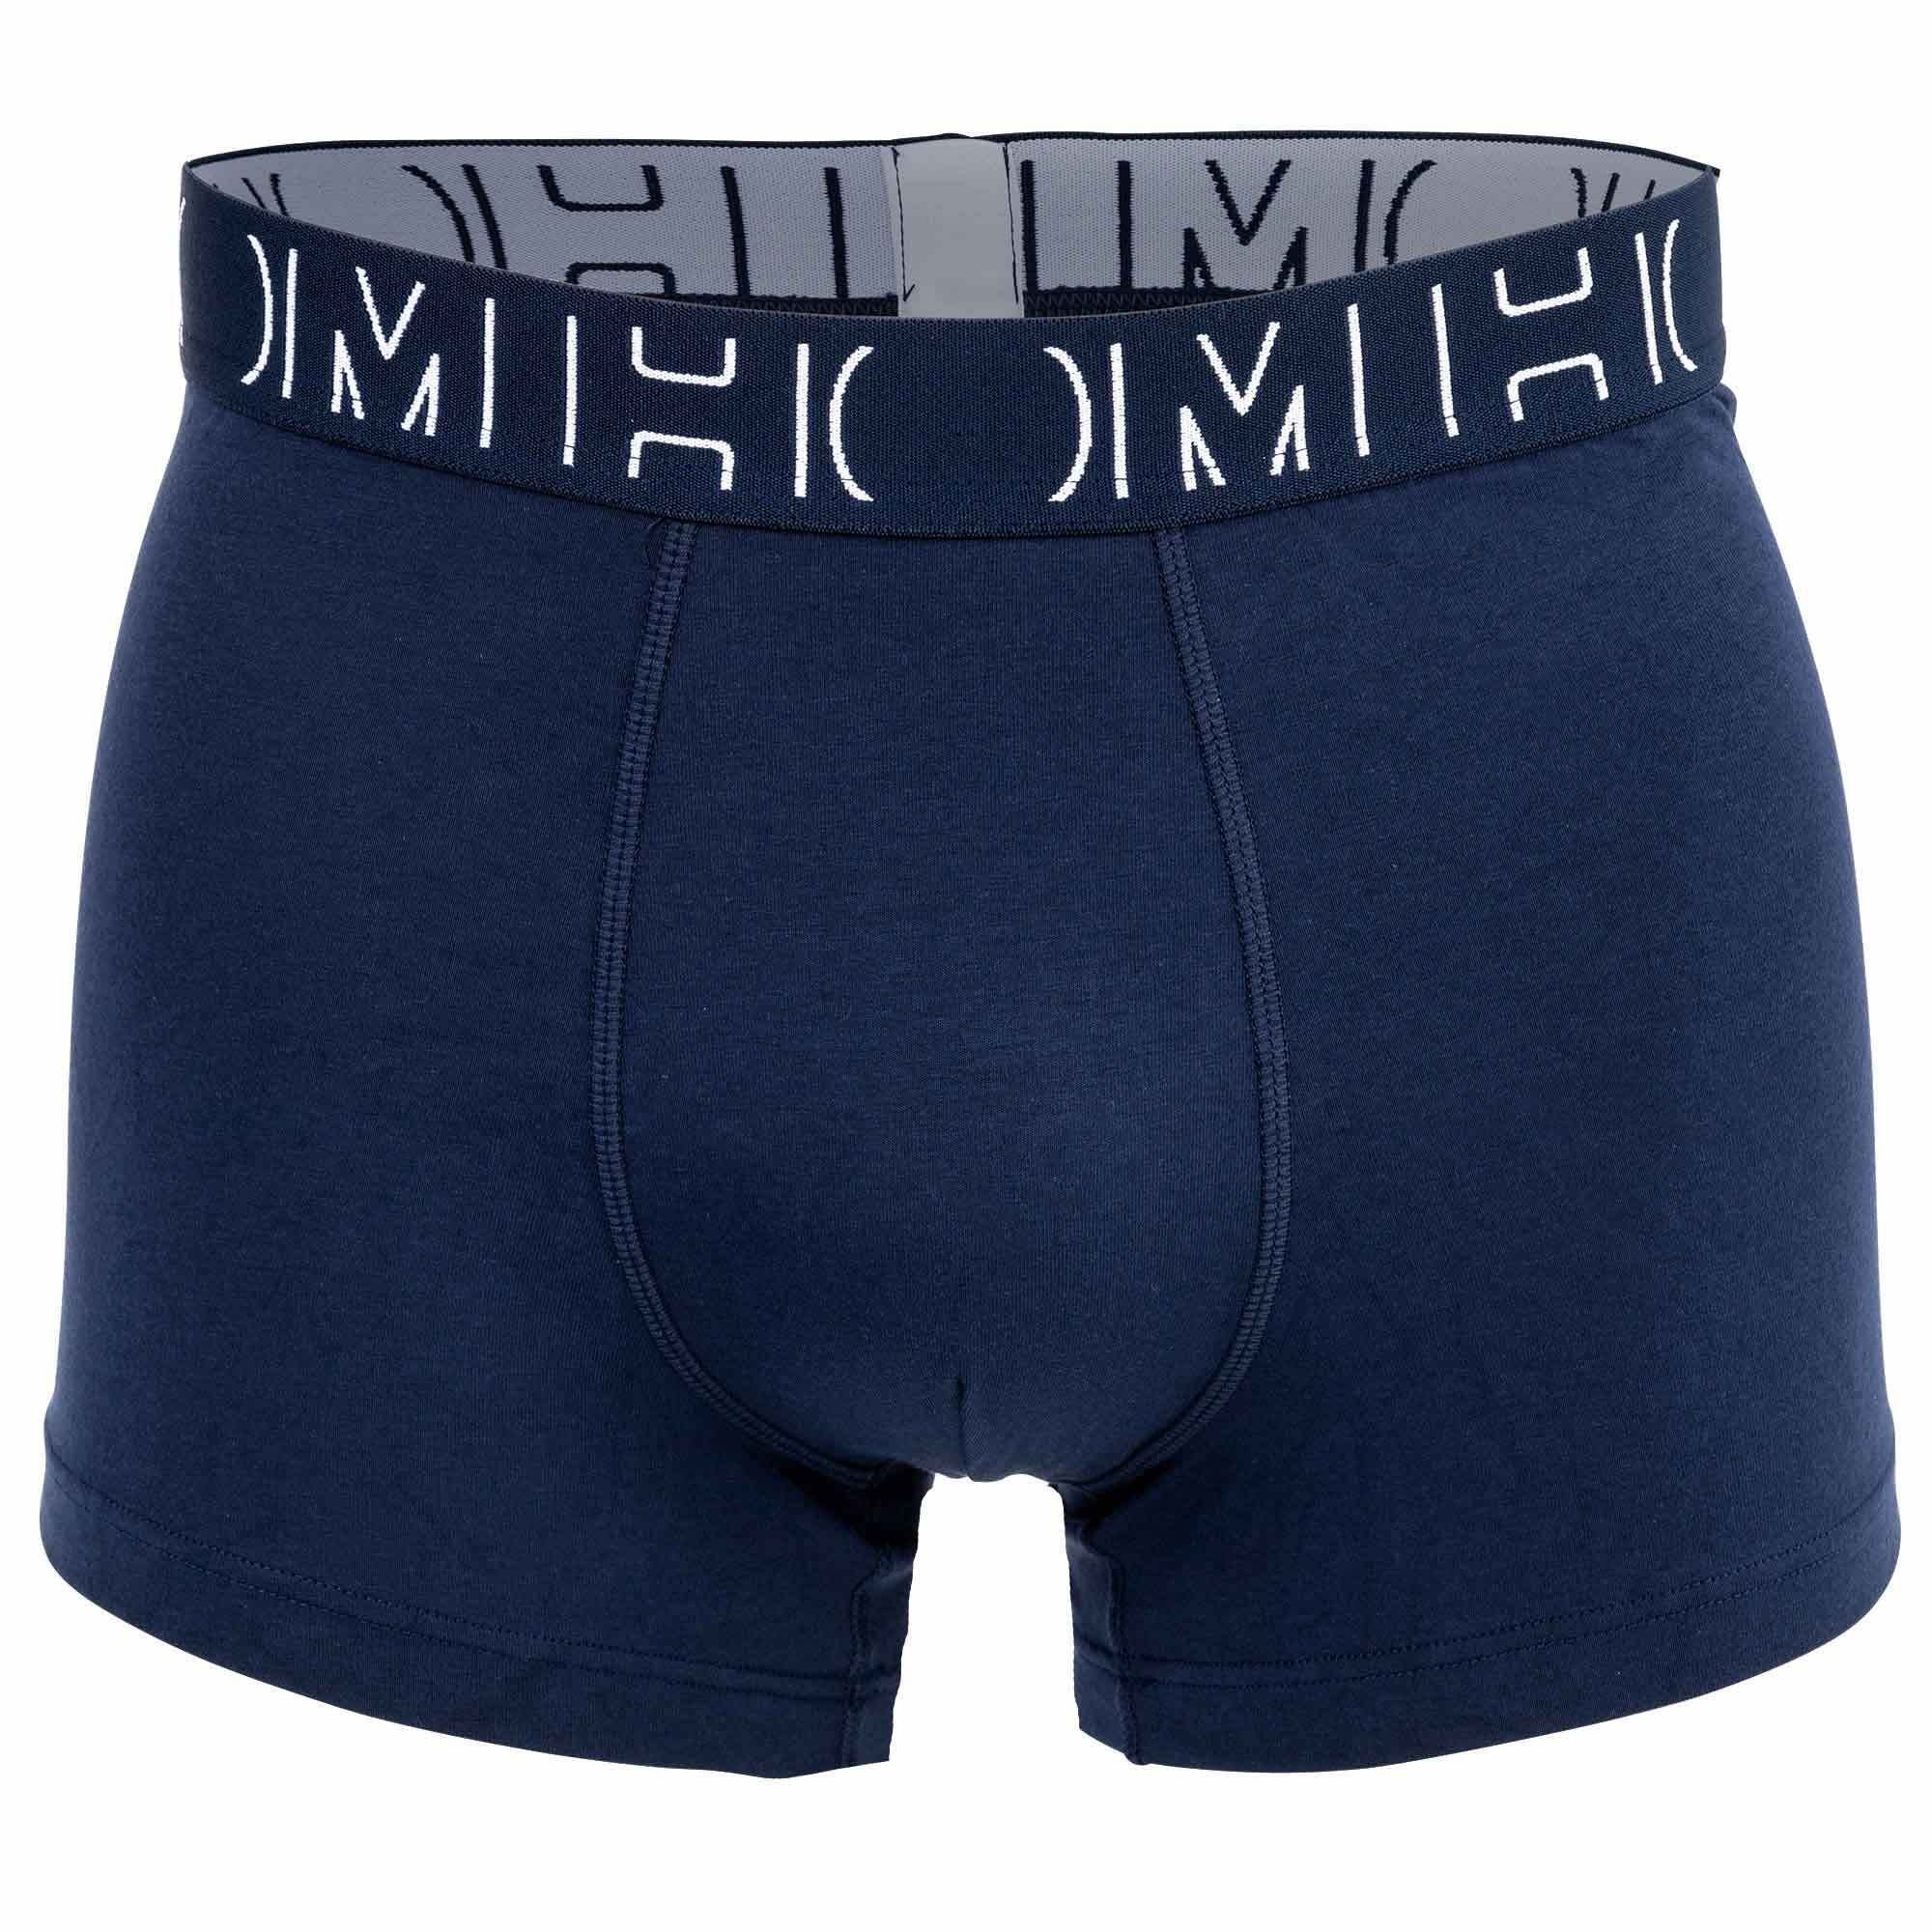 Boxer Shorts #2, Herren Briefs, Hom - Pack Alex 3er Boxer